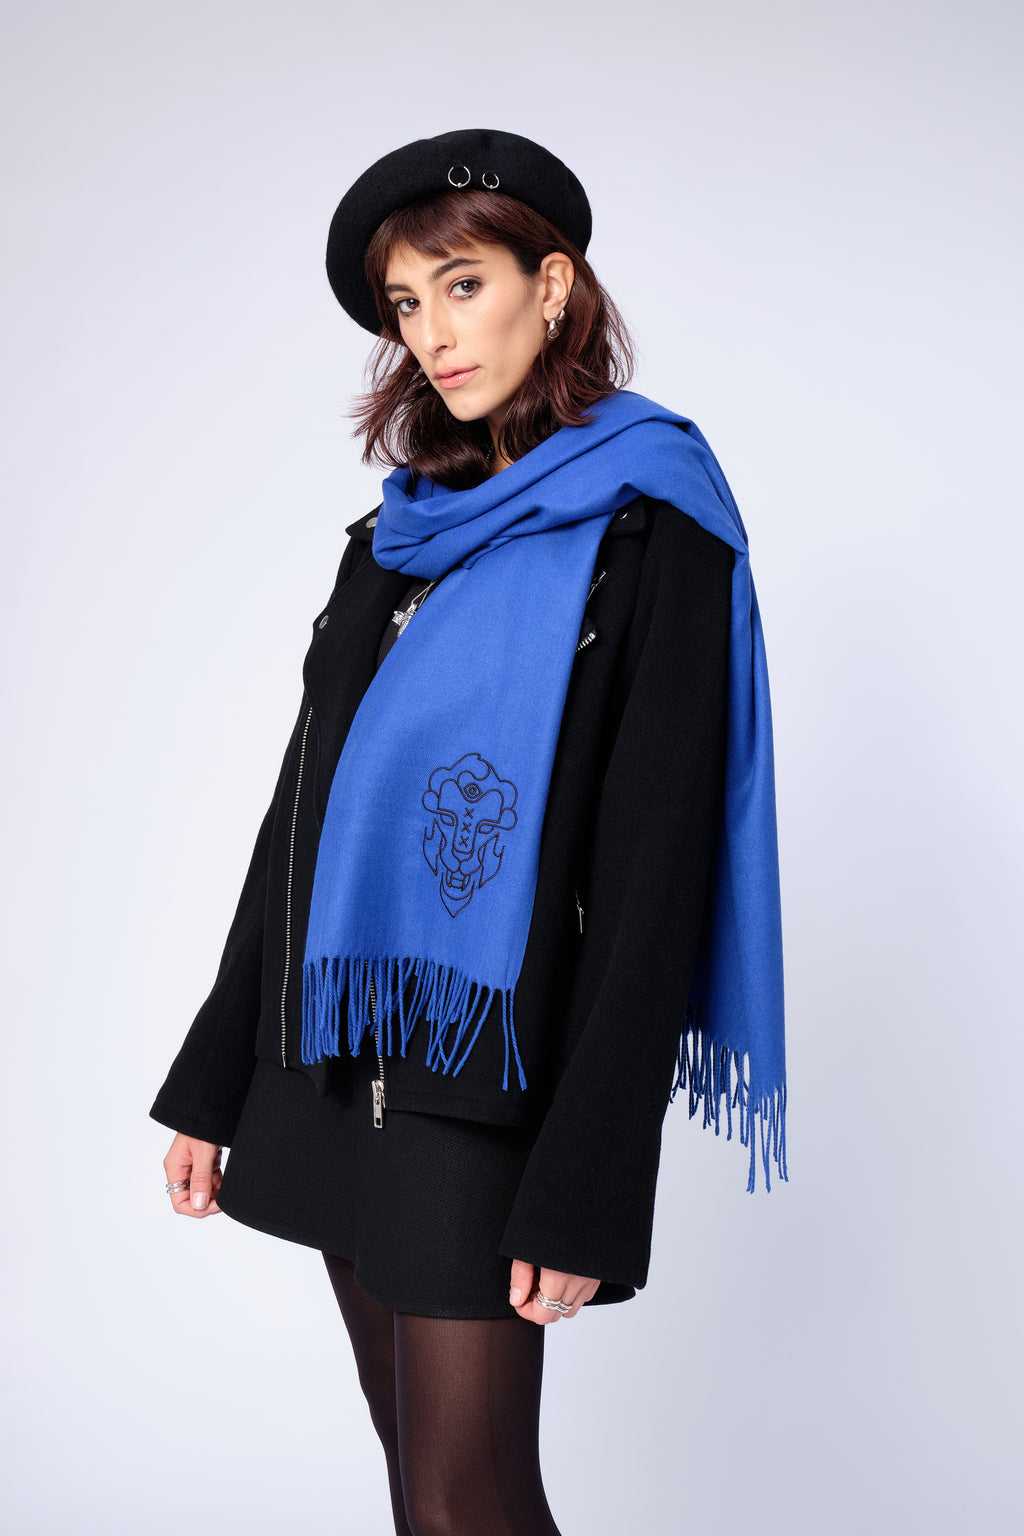 stillsveta cobalt blue cashmere scarf with Amsterdam lion design